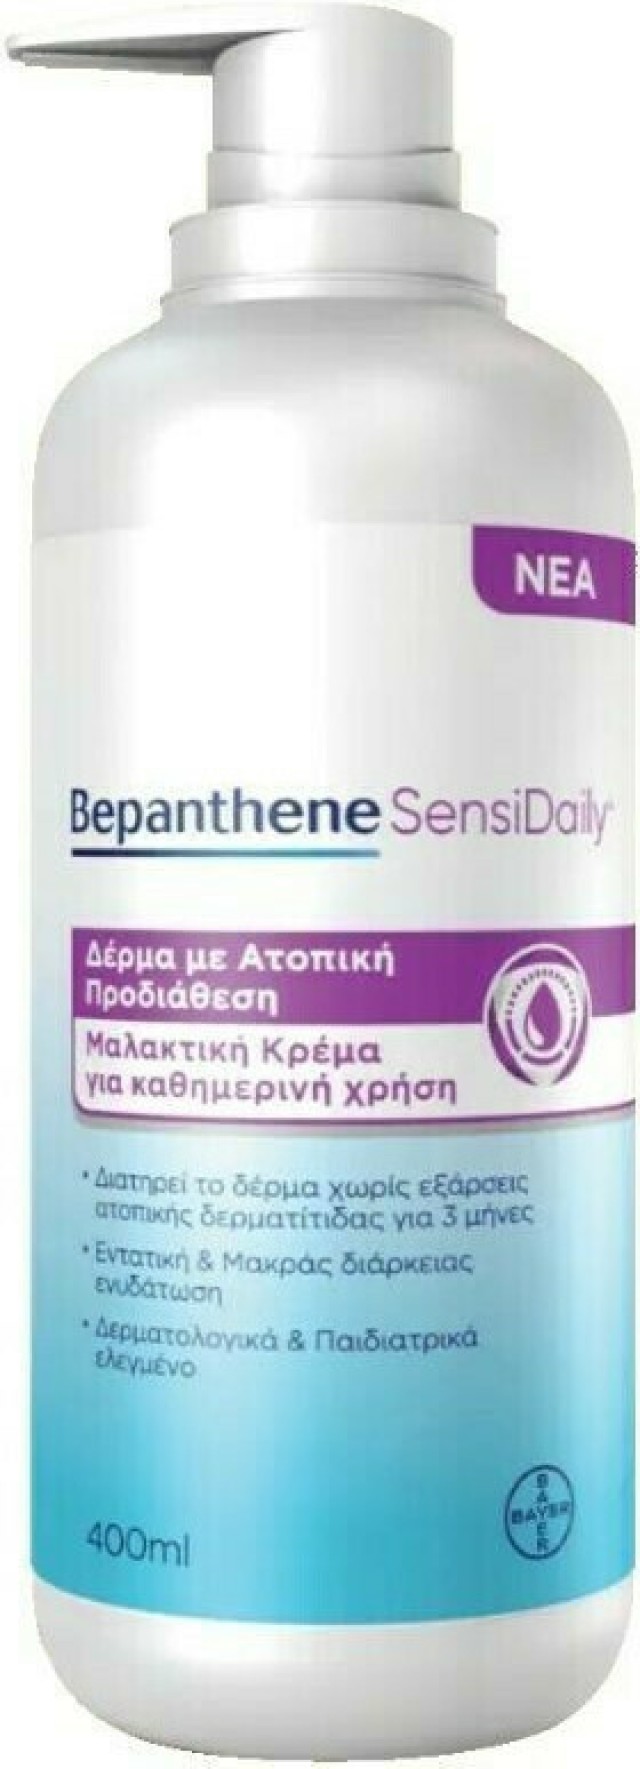 BEPANTHOL Bepanthene SensiDaily, Μαλακτική Κρέμα Για Δέρμα Με Ατοπική Προδιάθεση, 400ml